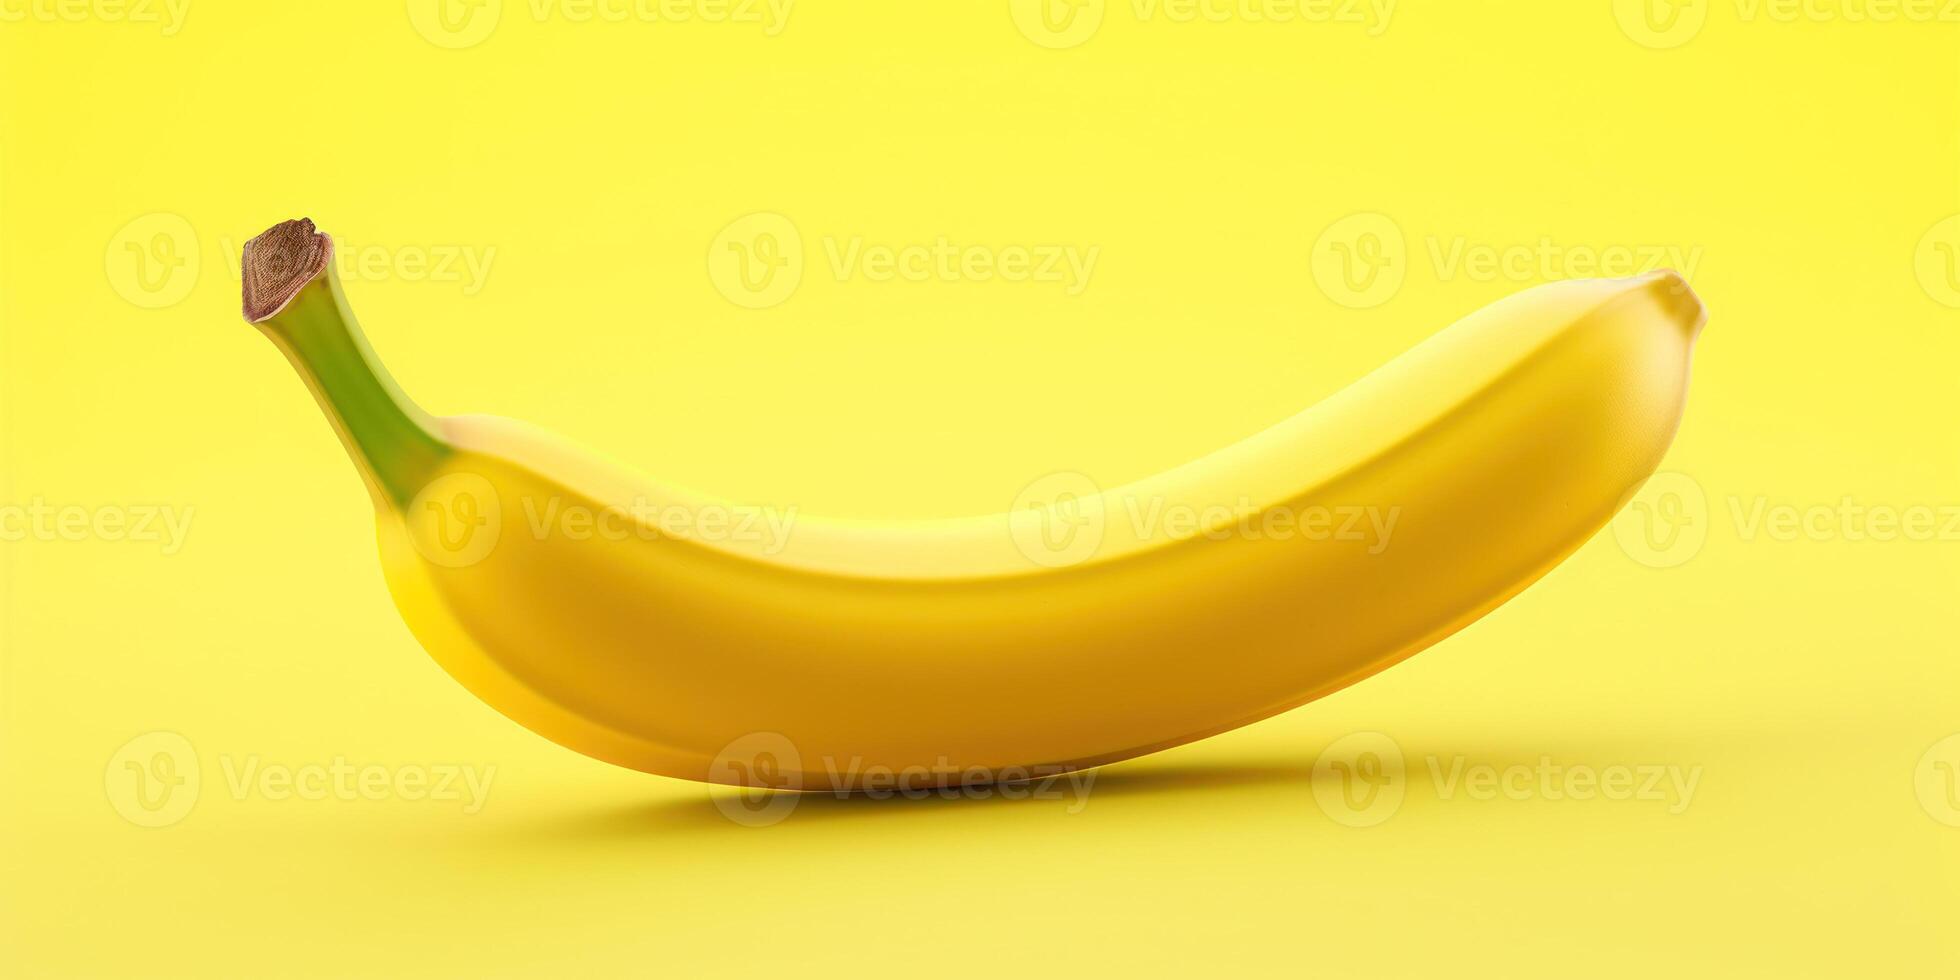 AI Generated Banana On Yellow Background. Minimalist Composition Of Single Banana Against Monochrome Backdrop. Healthy Snack. Generative AI photo